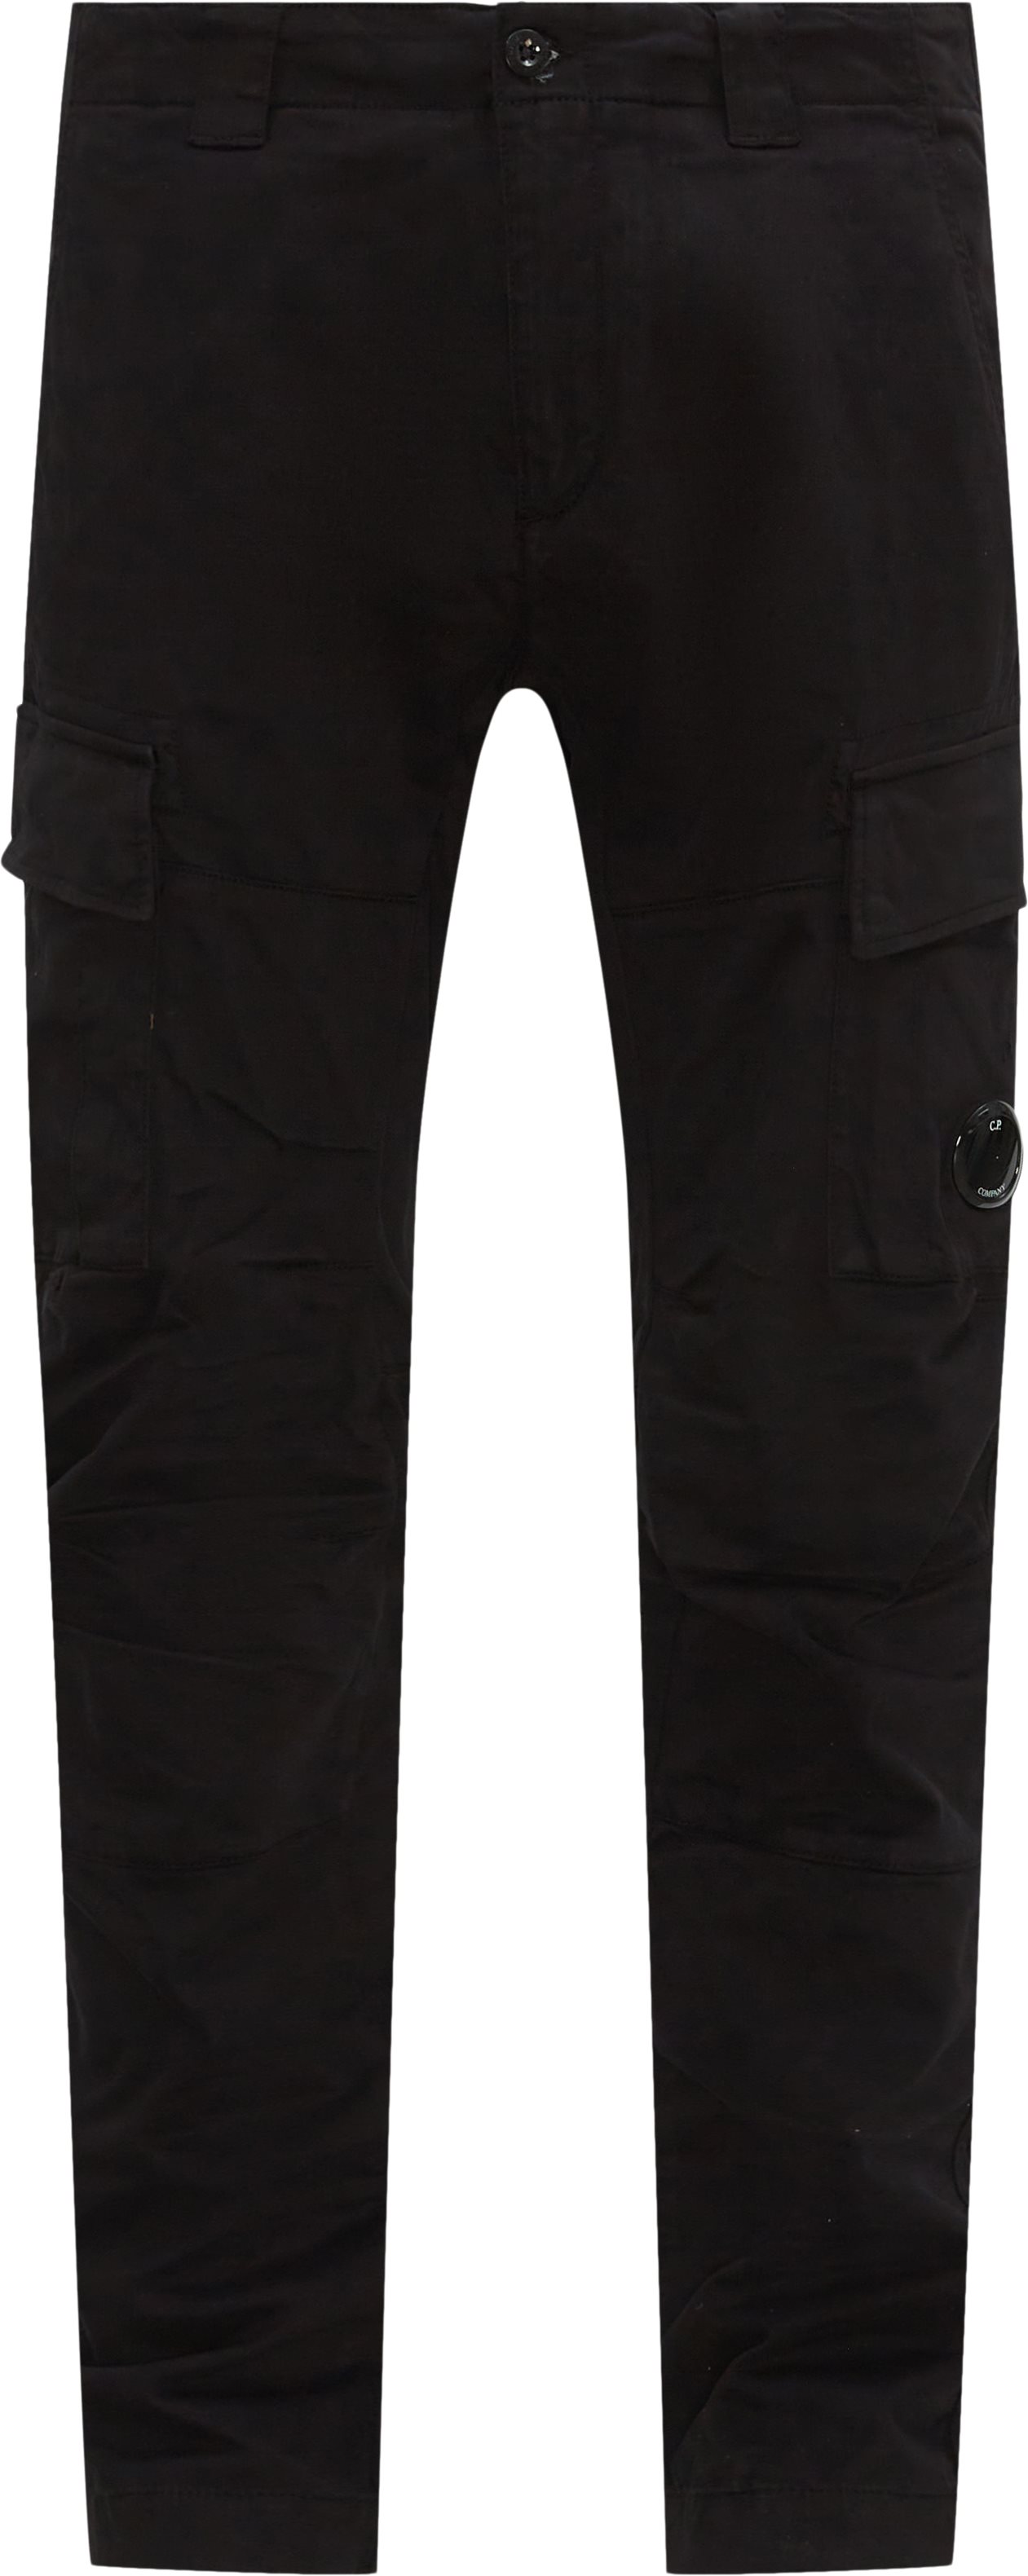 C.P. Company Trousers PA186A 005529G 2303 Black